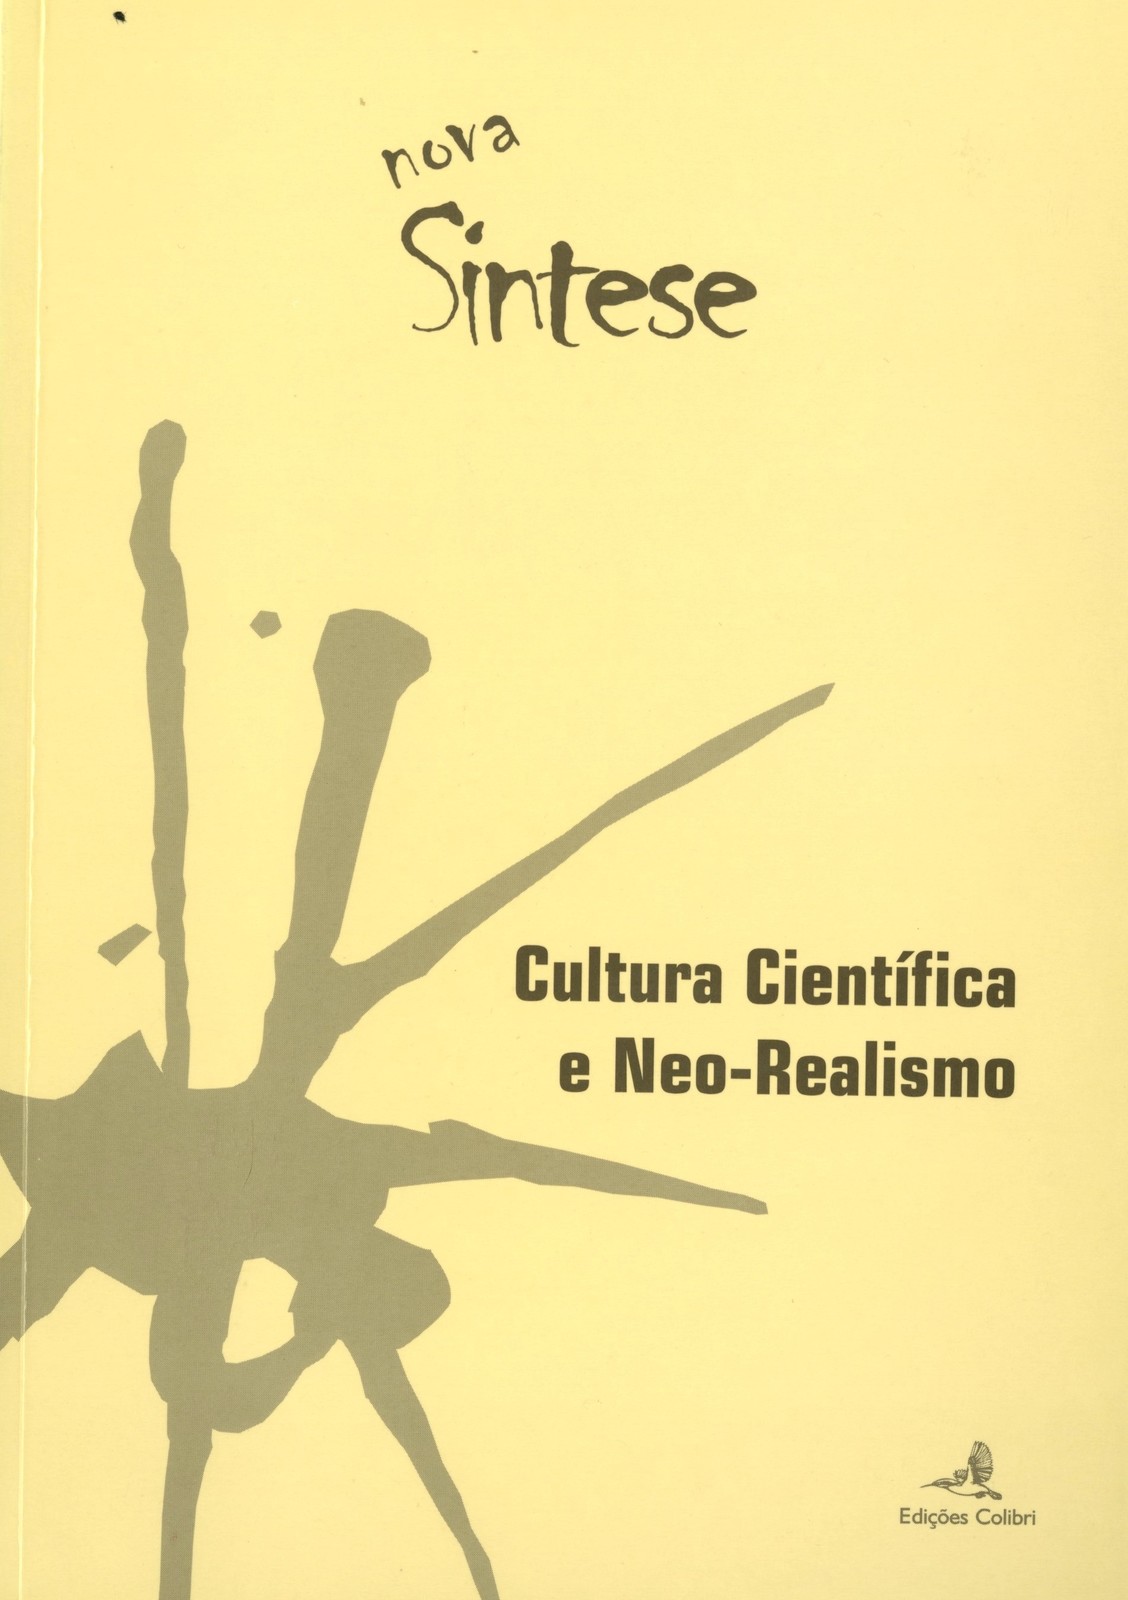 Nova Síntese, Cultura Científica e Neo-Realismo